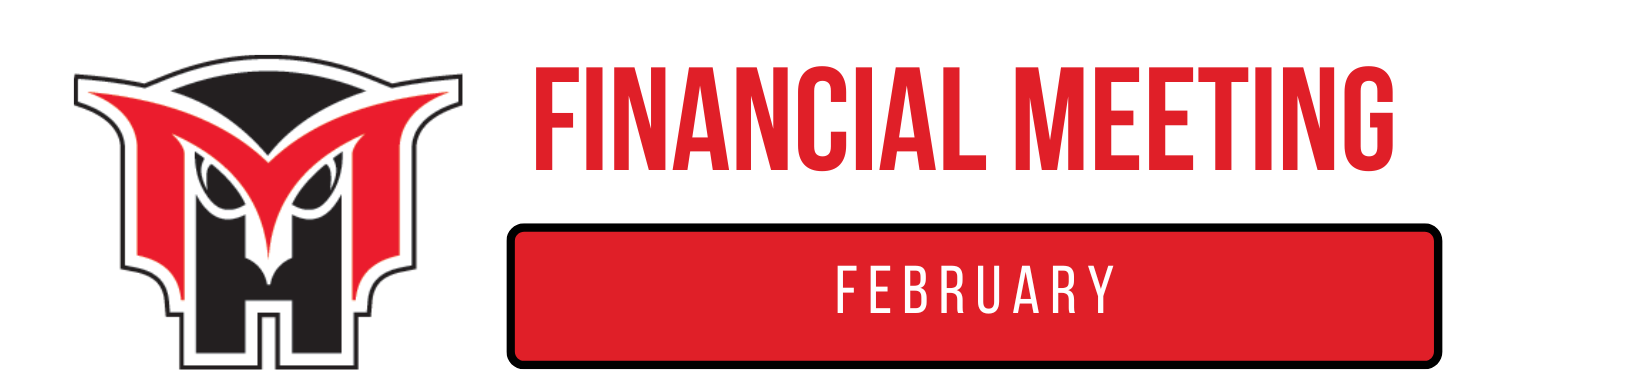 financial meeting  - February